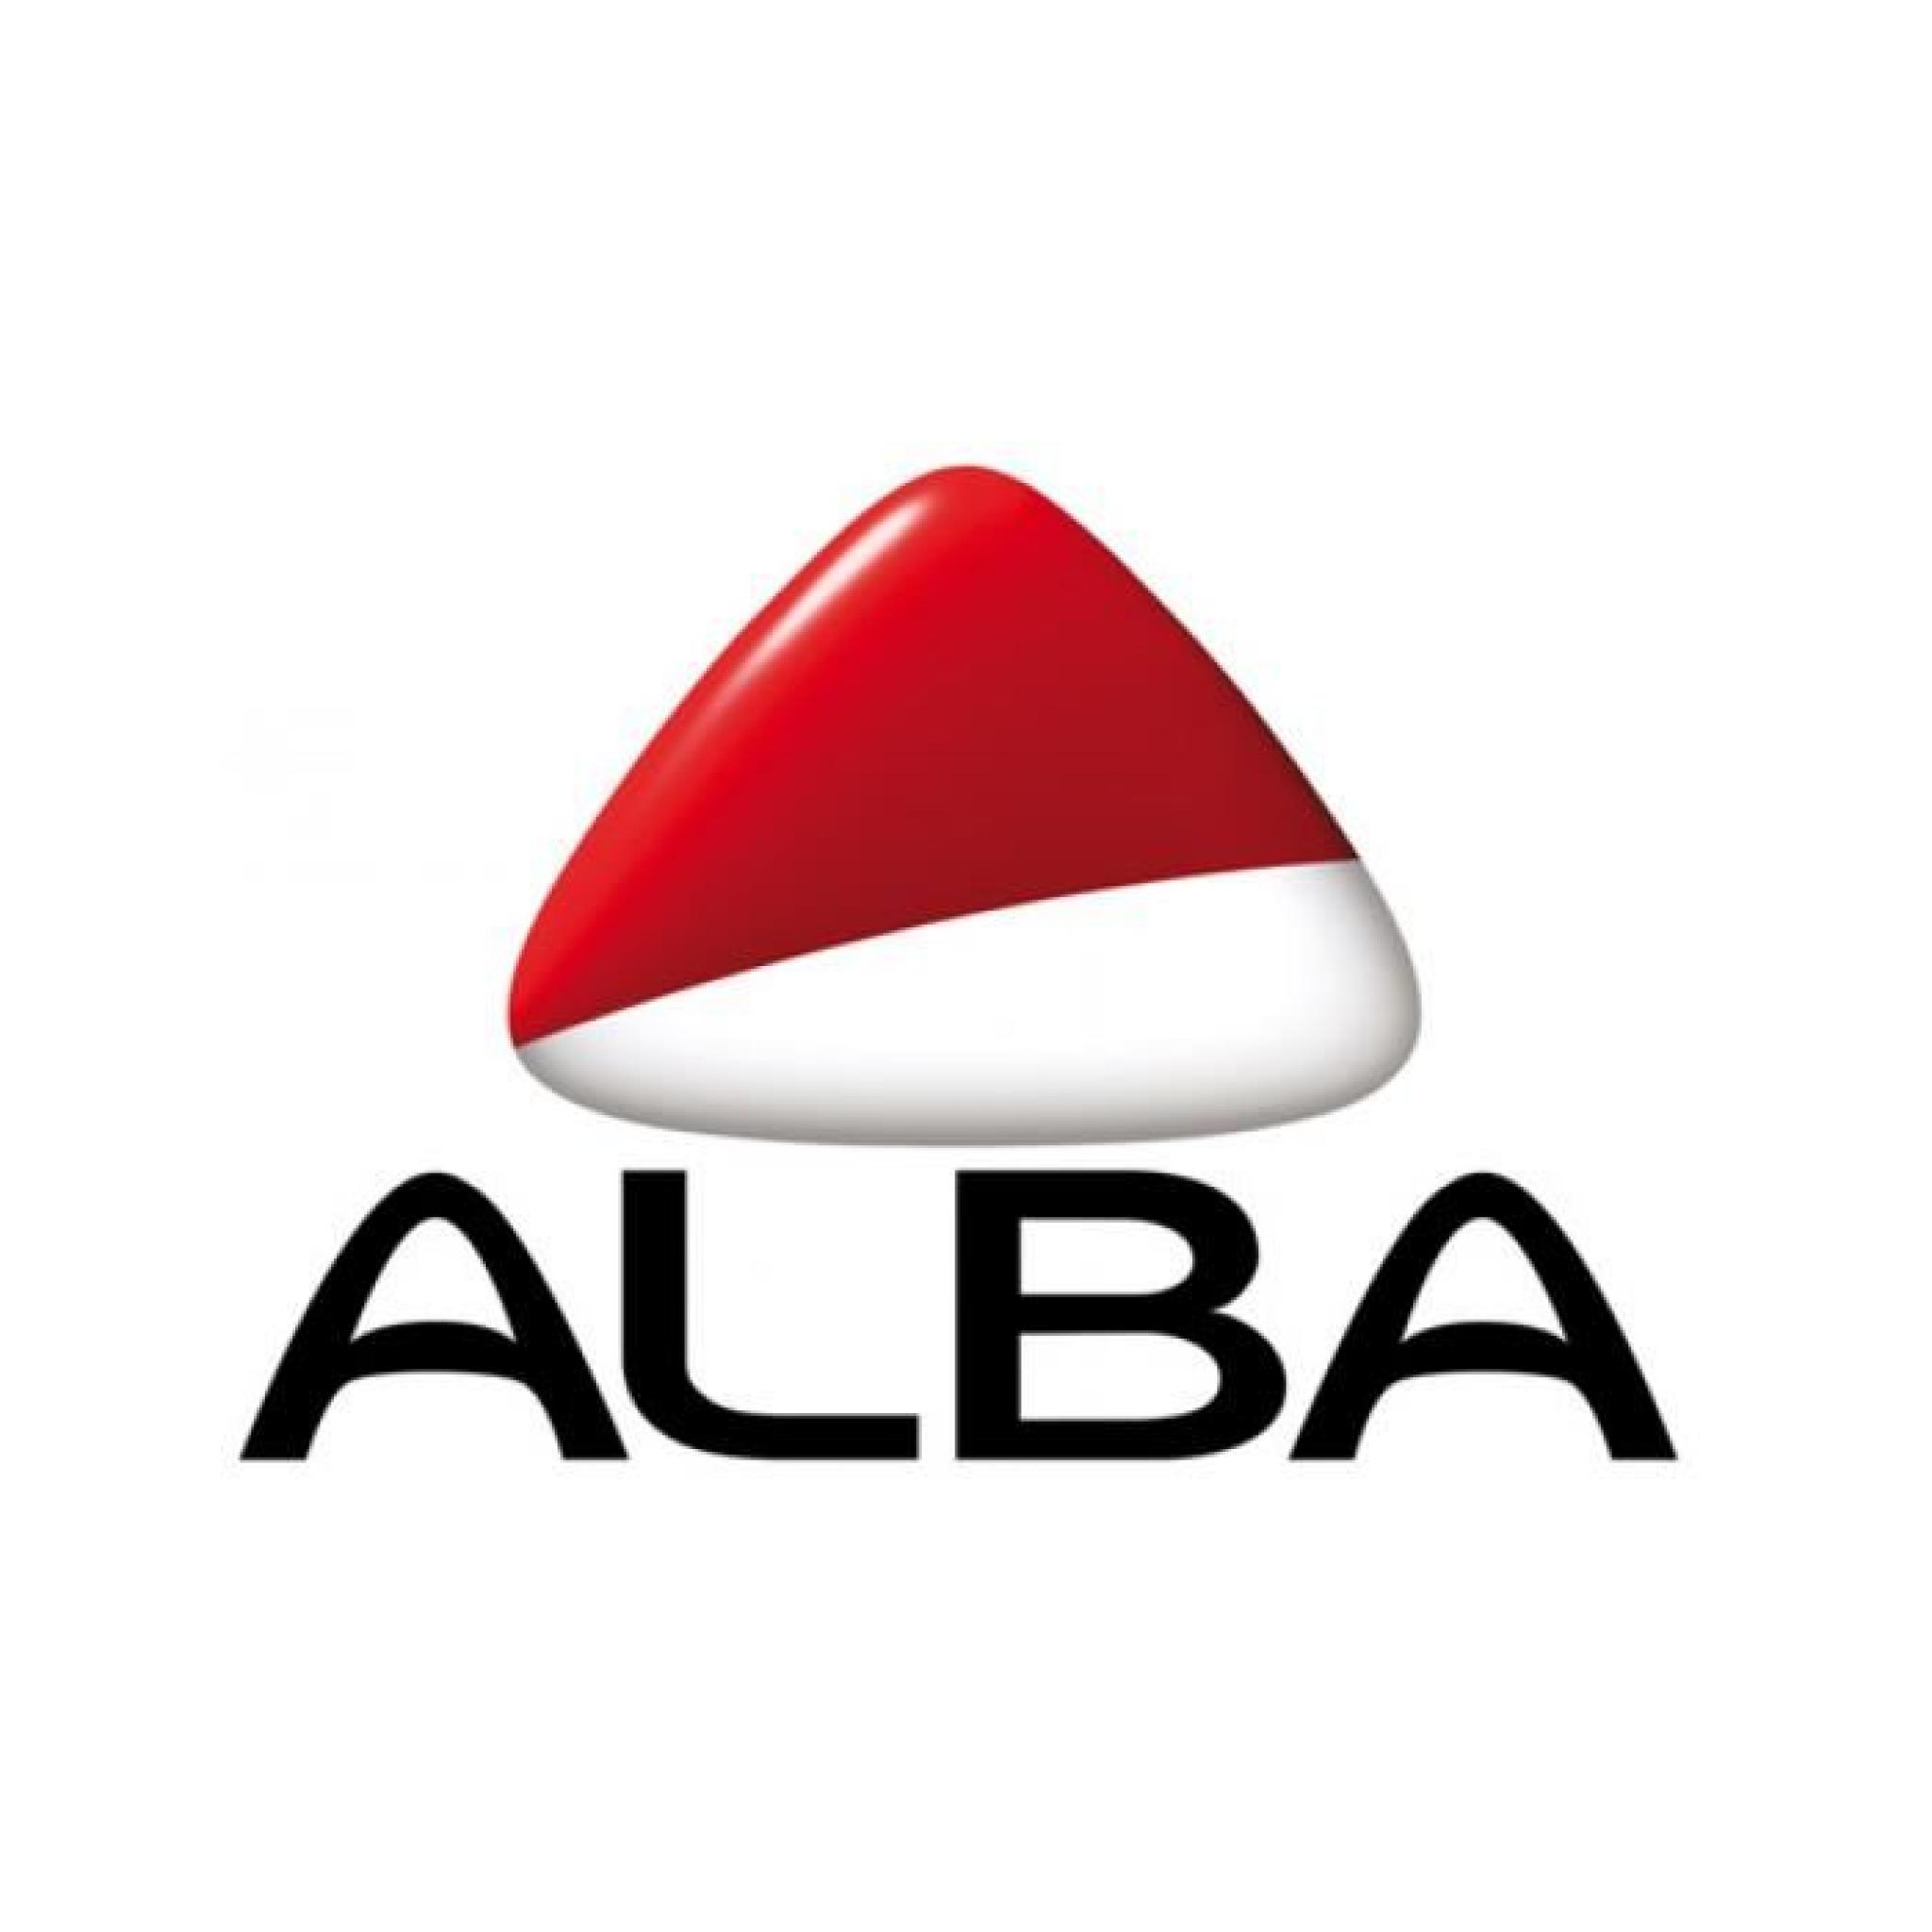 ALBA - PMTRIA_RS - Porte-parapluies triangulaire pas cher